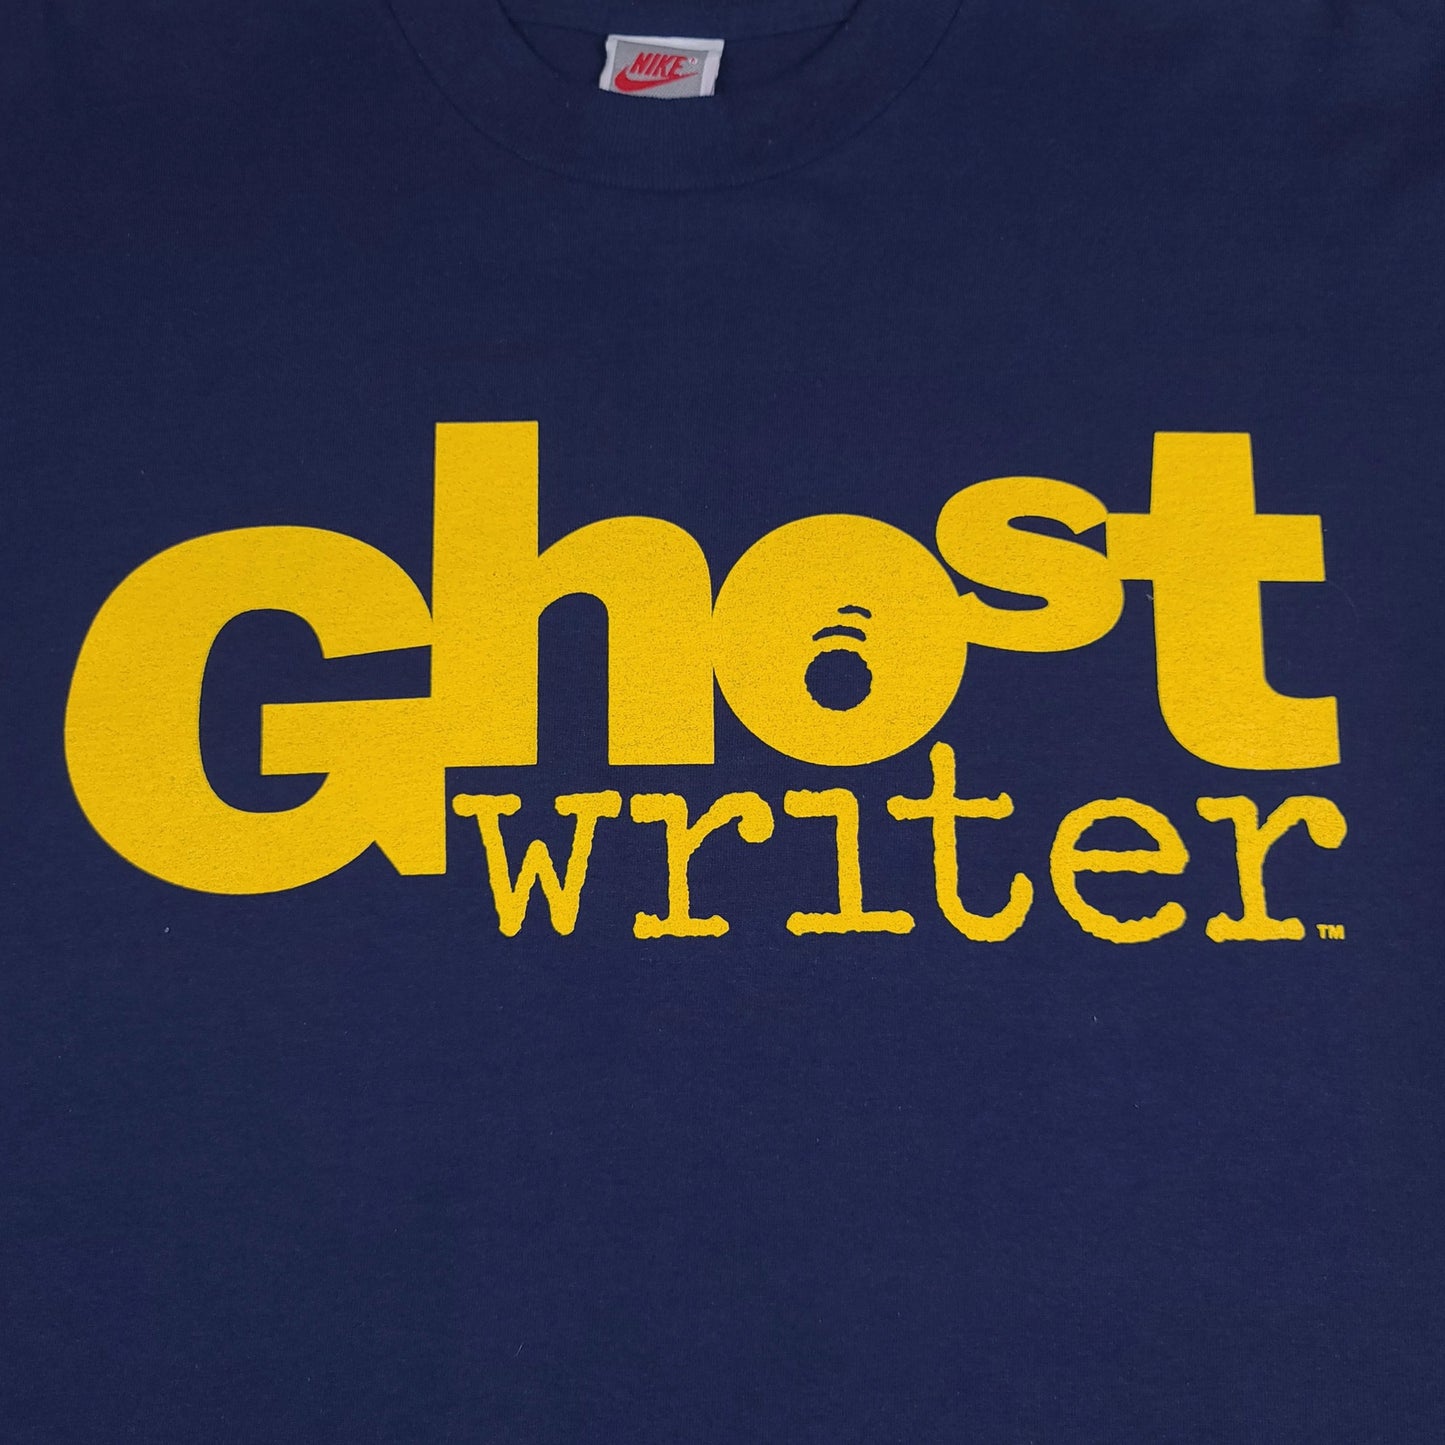 Nike Ghost Writer Tv Show Promo Shirt Spike Lee